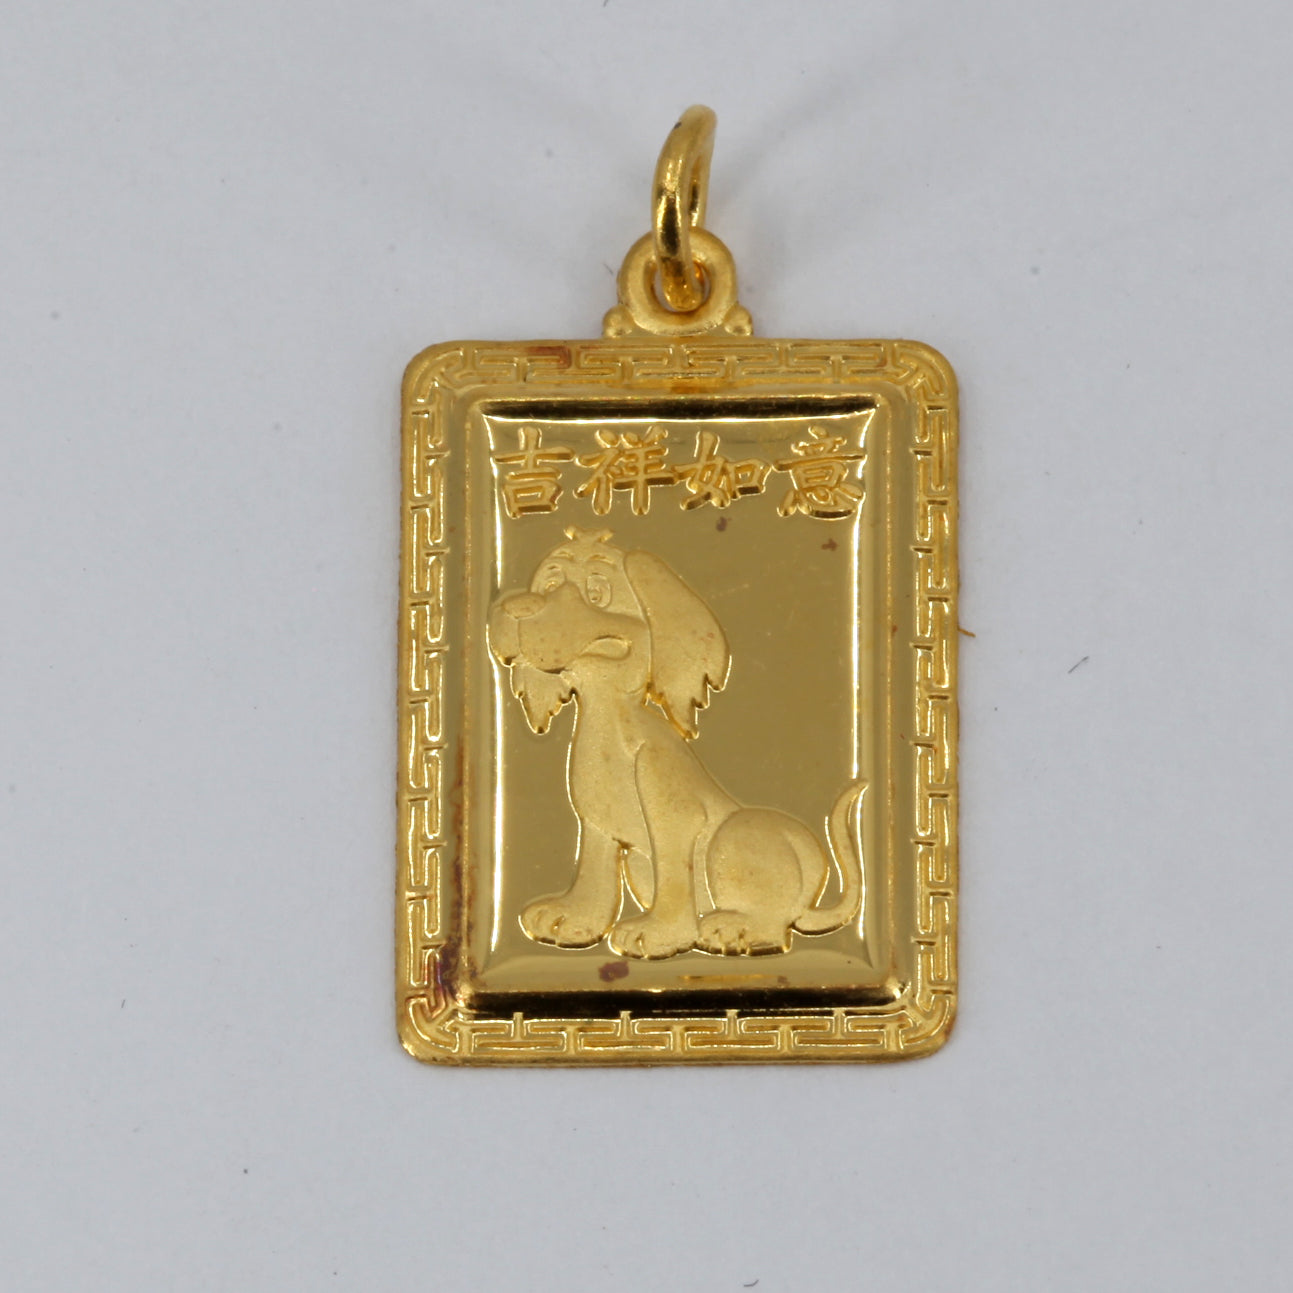 24K Solid Yellow Gold Rectangular Zodiac Dog Pendant 3.7 Grams